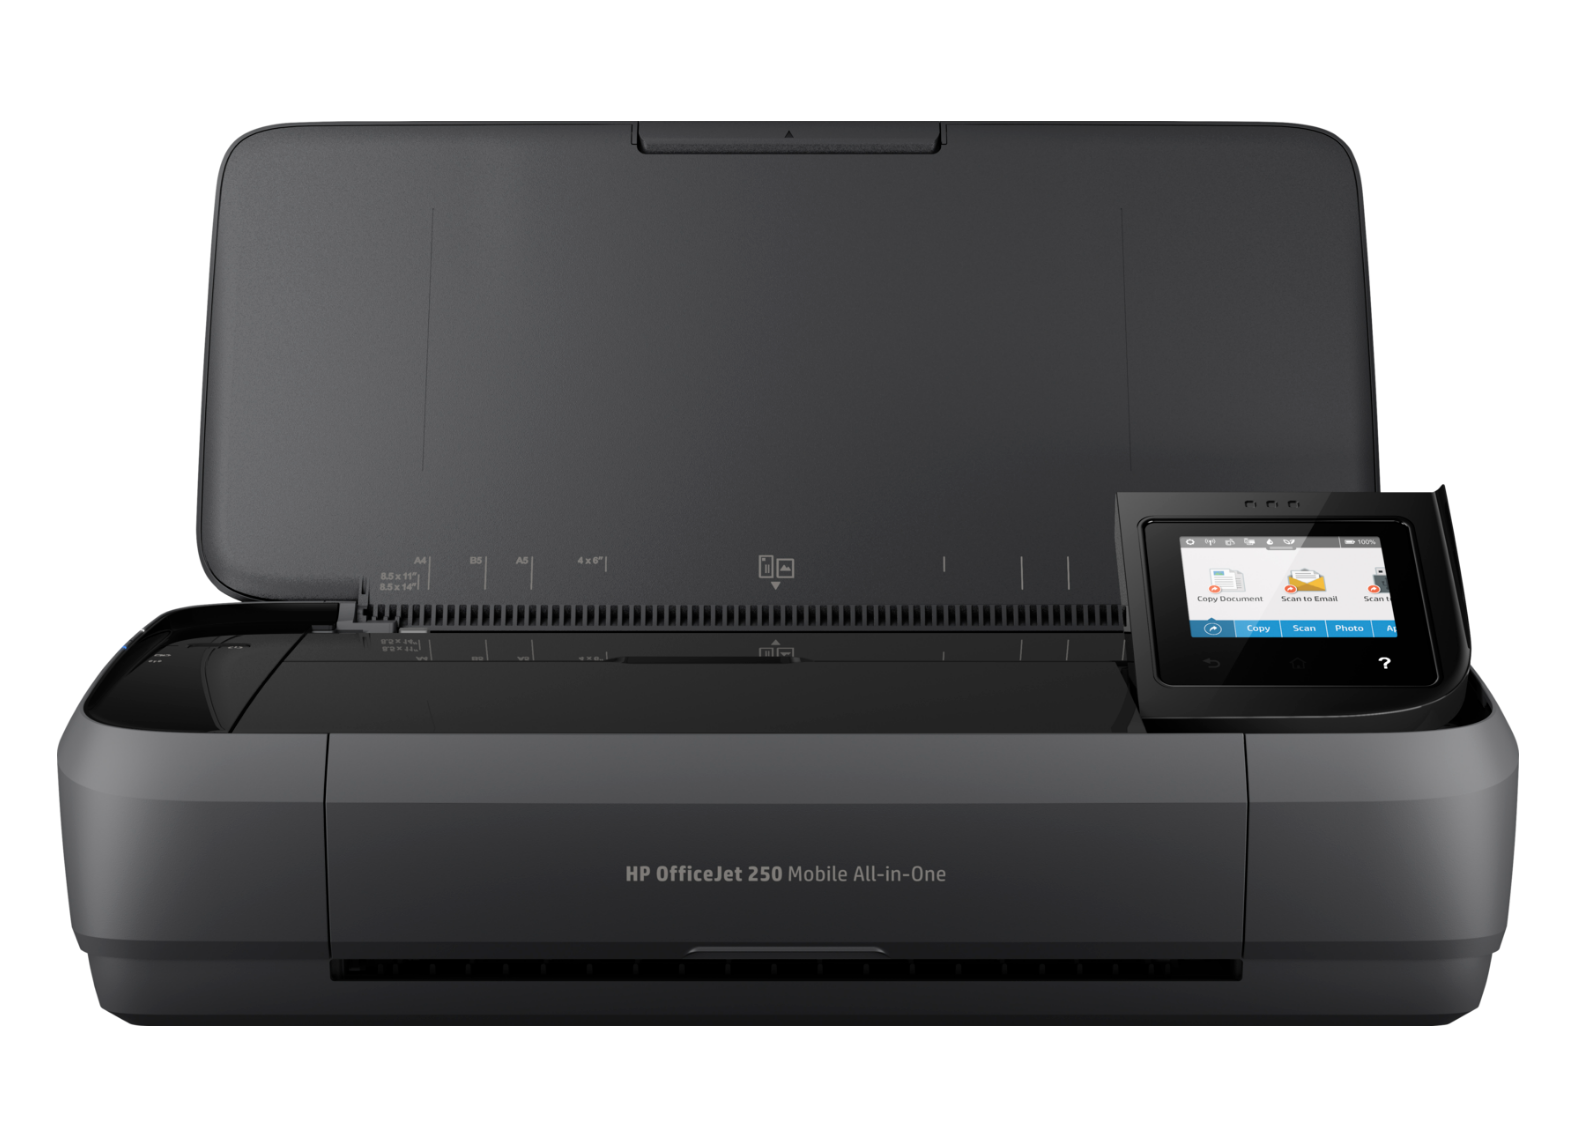 HP OfficeJet 250 - Best Printer